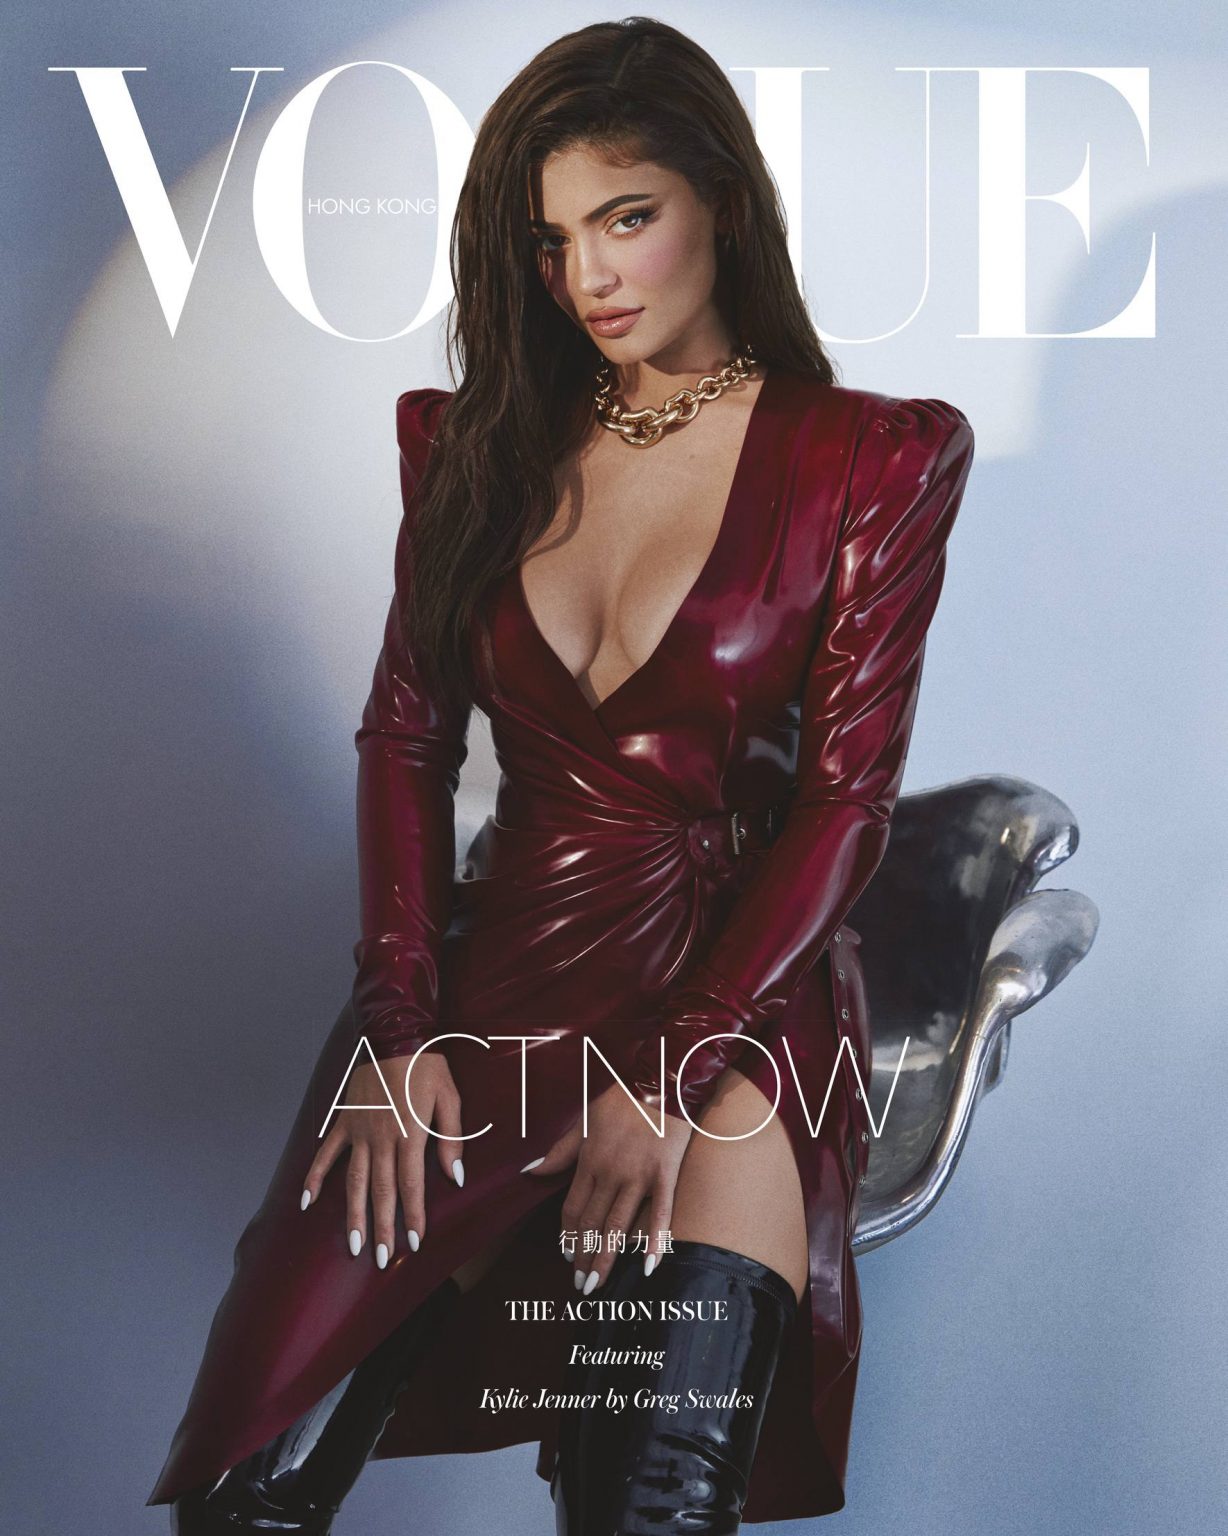 Photo n°6 : Kylie Jenner Airbrushed  Oblivion pour Vogue!